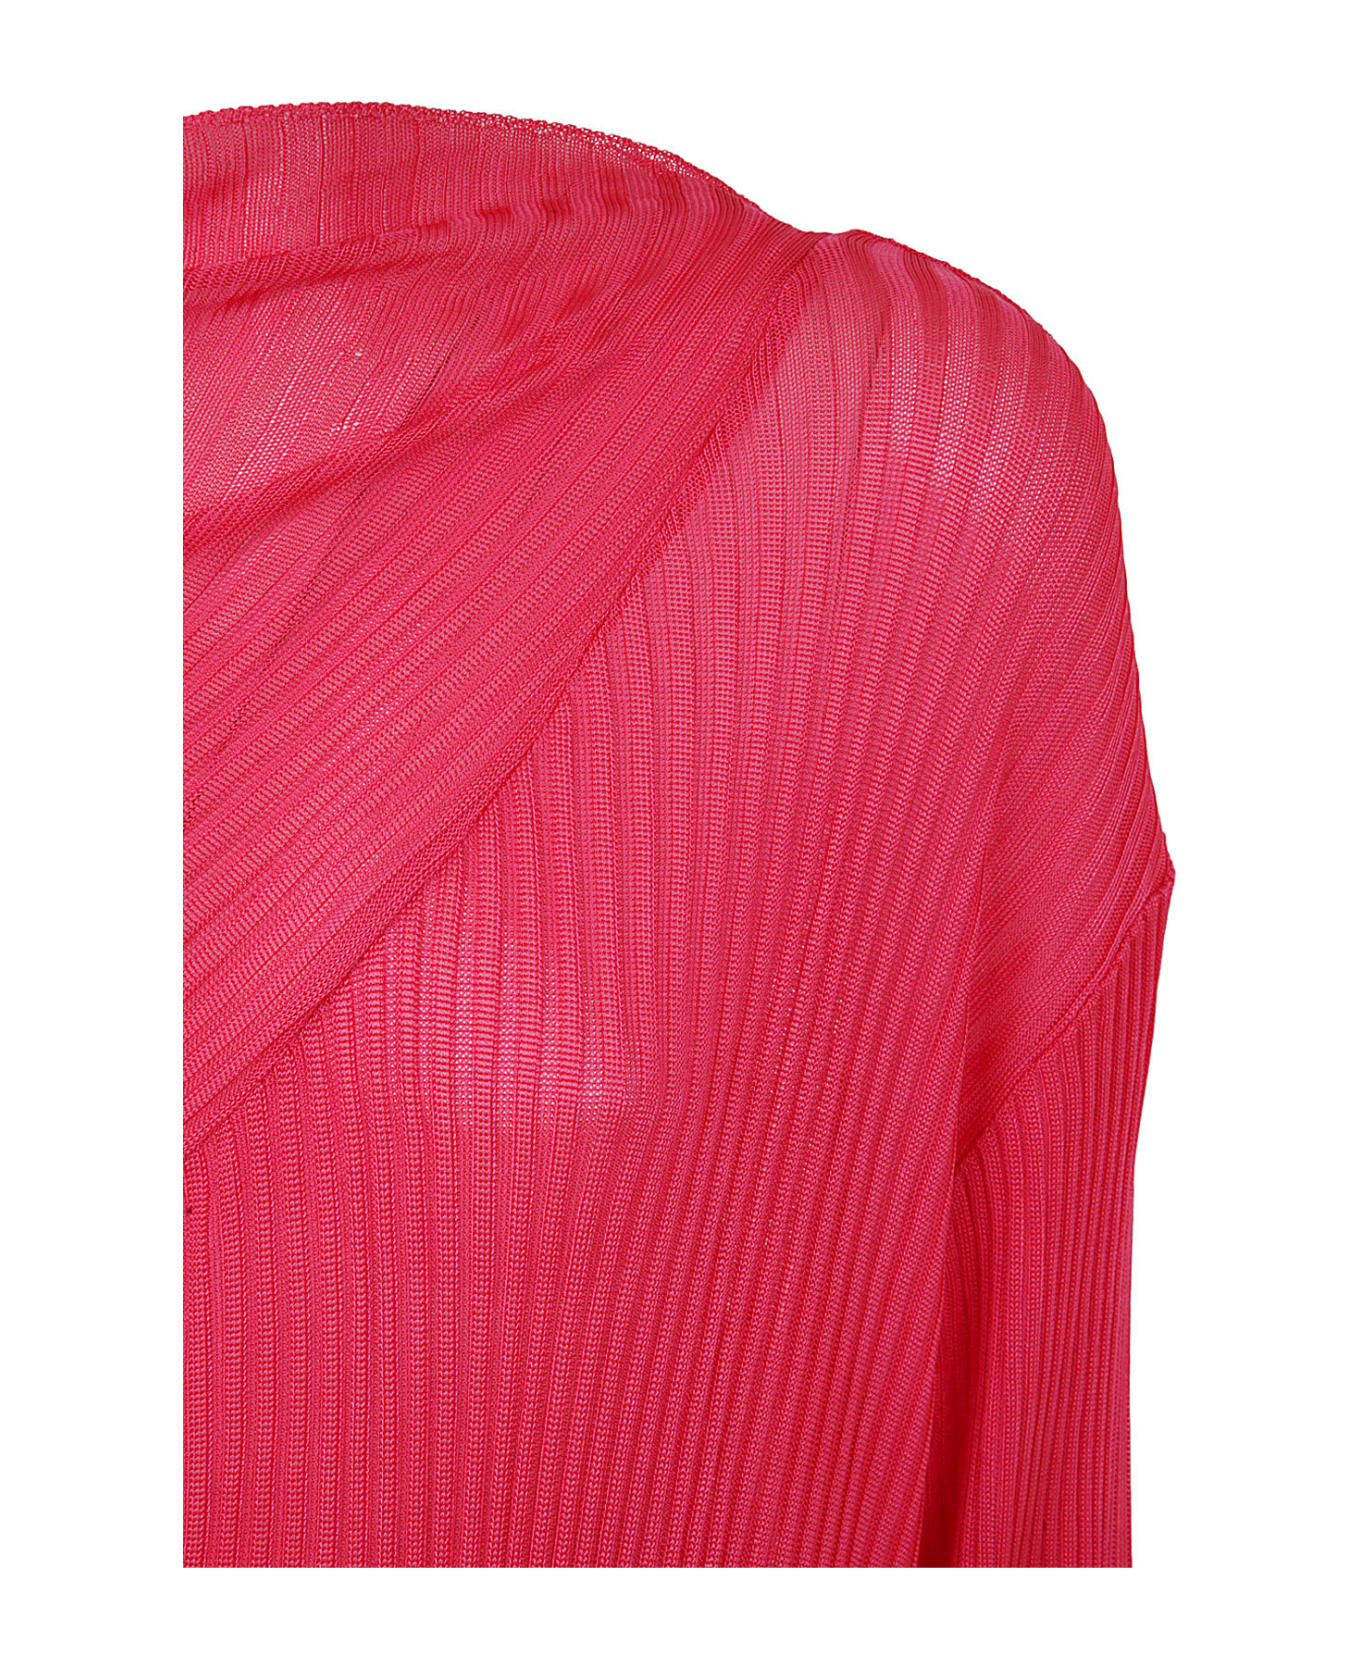 Marques'Almeida Draped Neck Dress - Pink